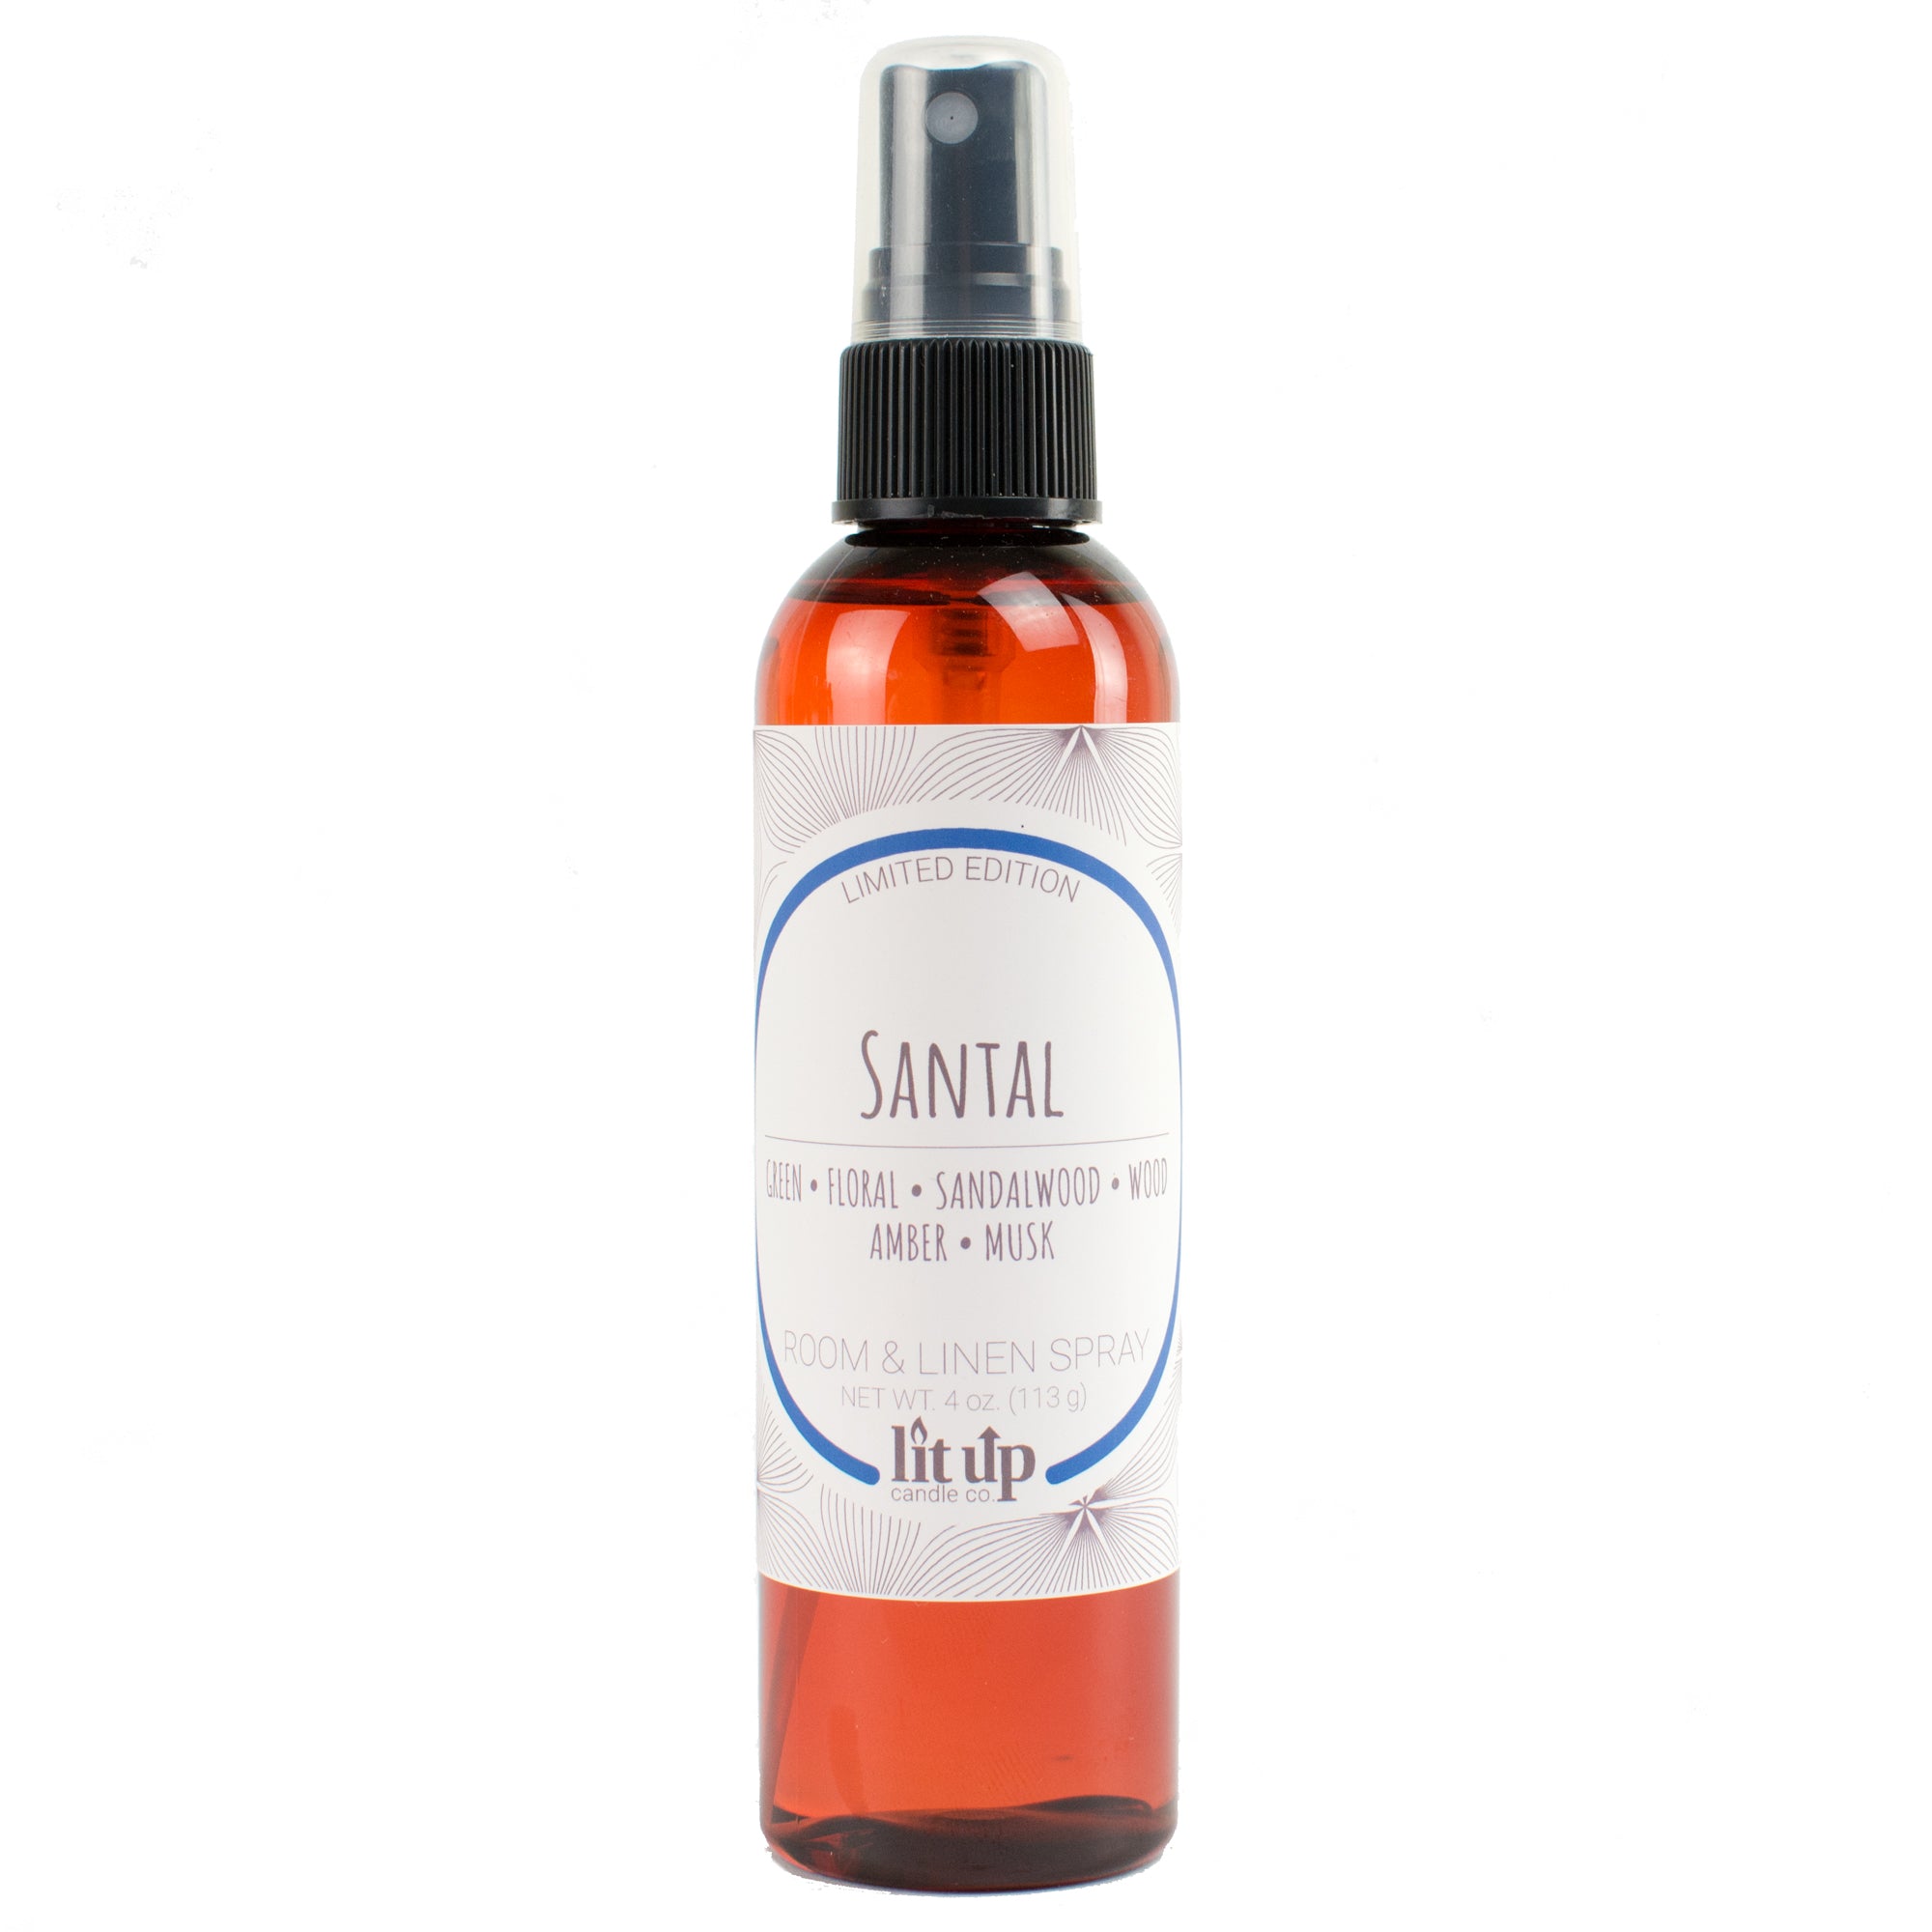 Santal scented 4 oz. room & linen spray